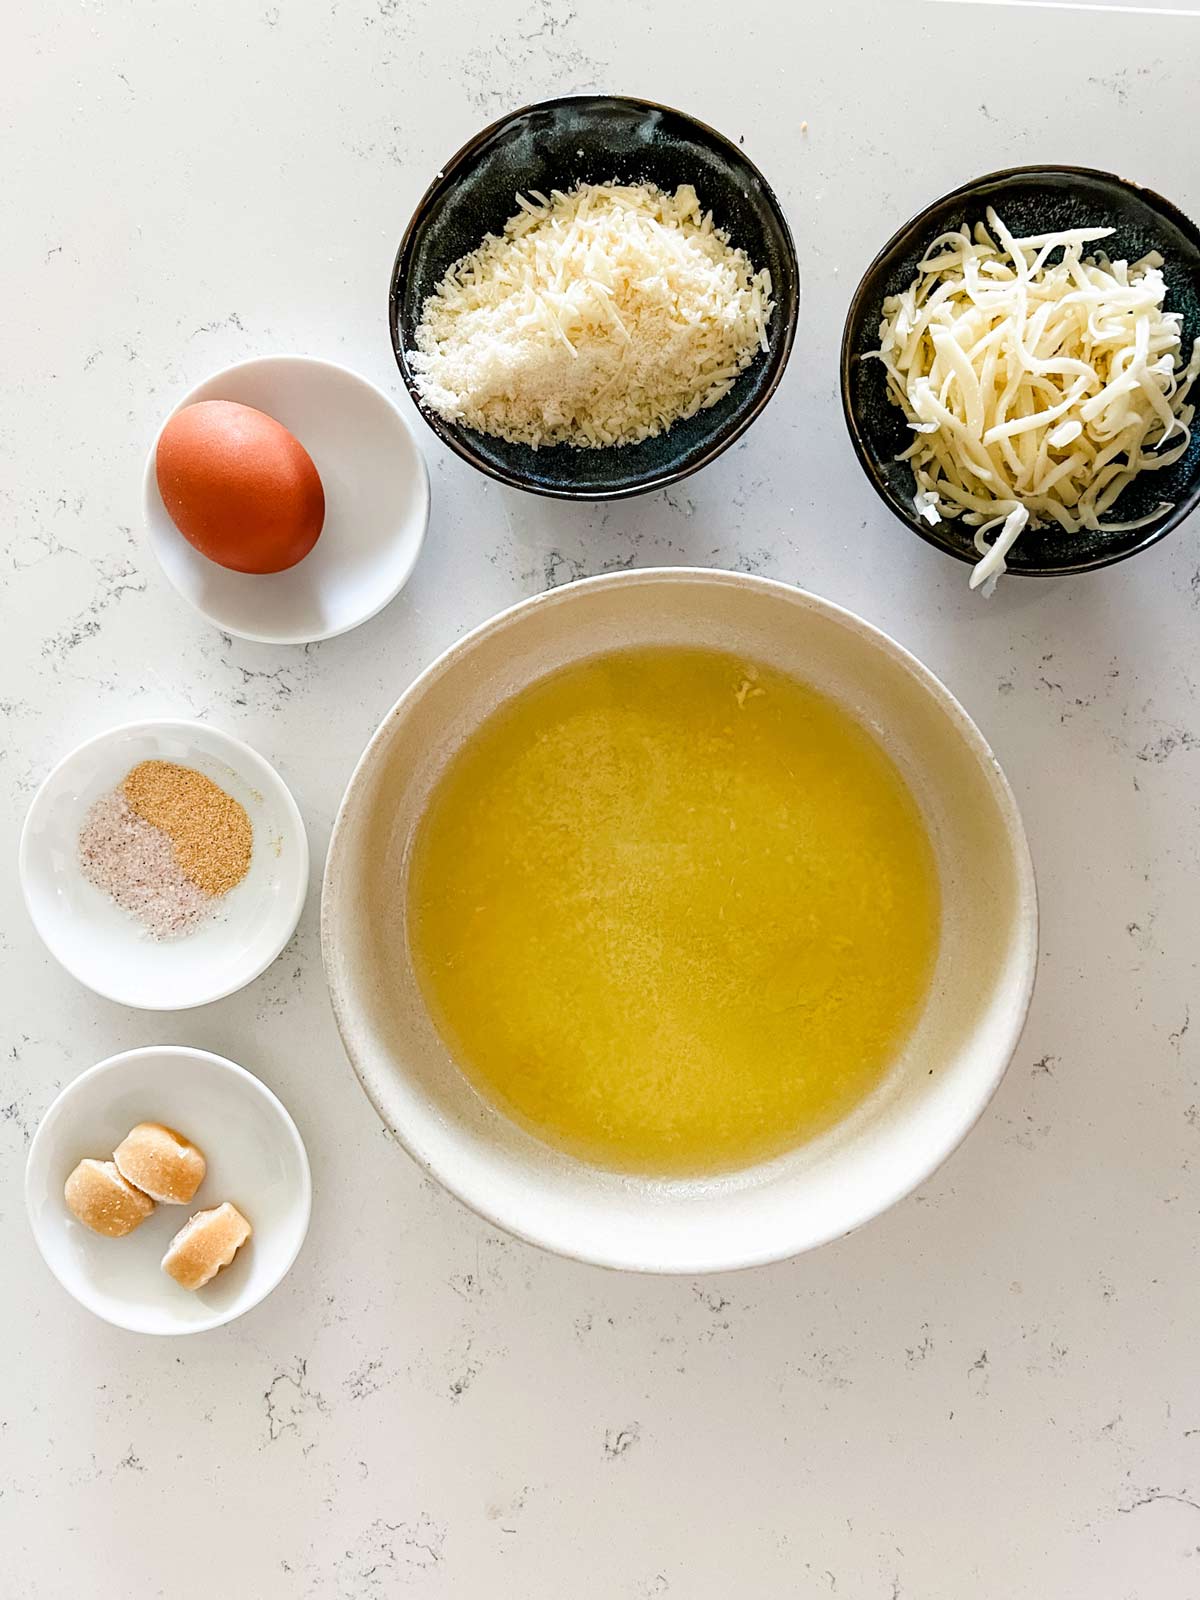 Garlic, oil, parmesan, mozzarella, egg, and seasonings in prep containers.